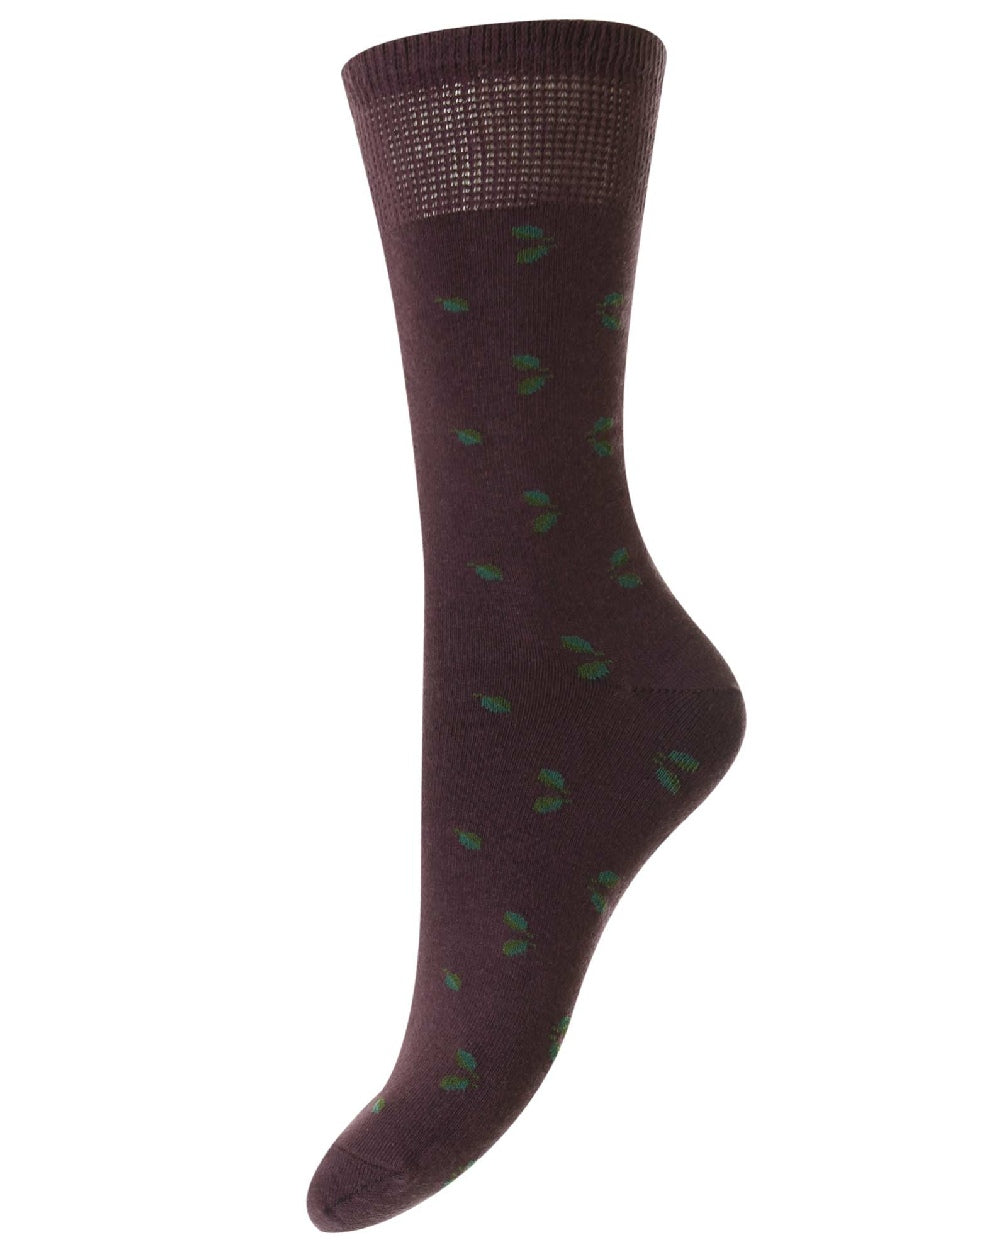 HJ Hall Leaf Cotton Comfort Top Socks in Grape 